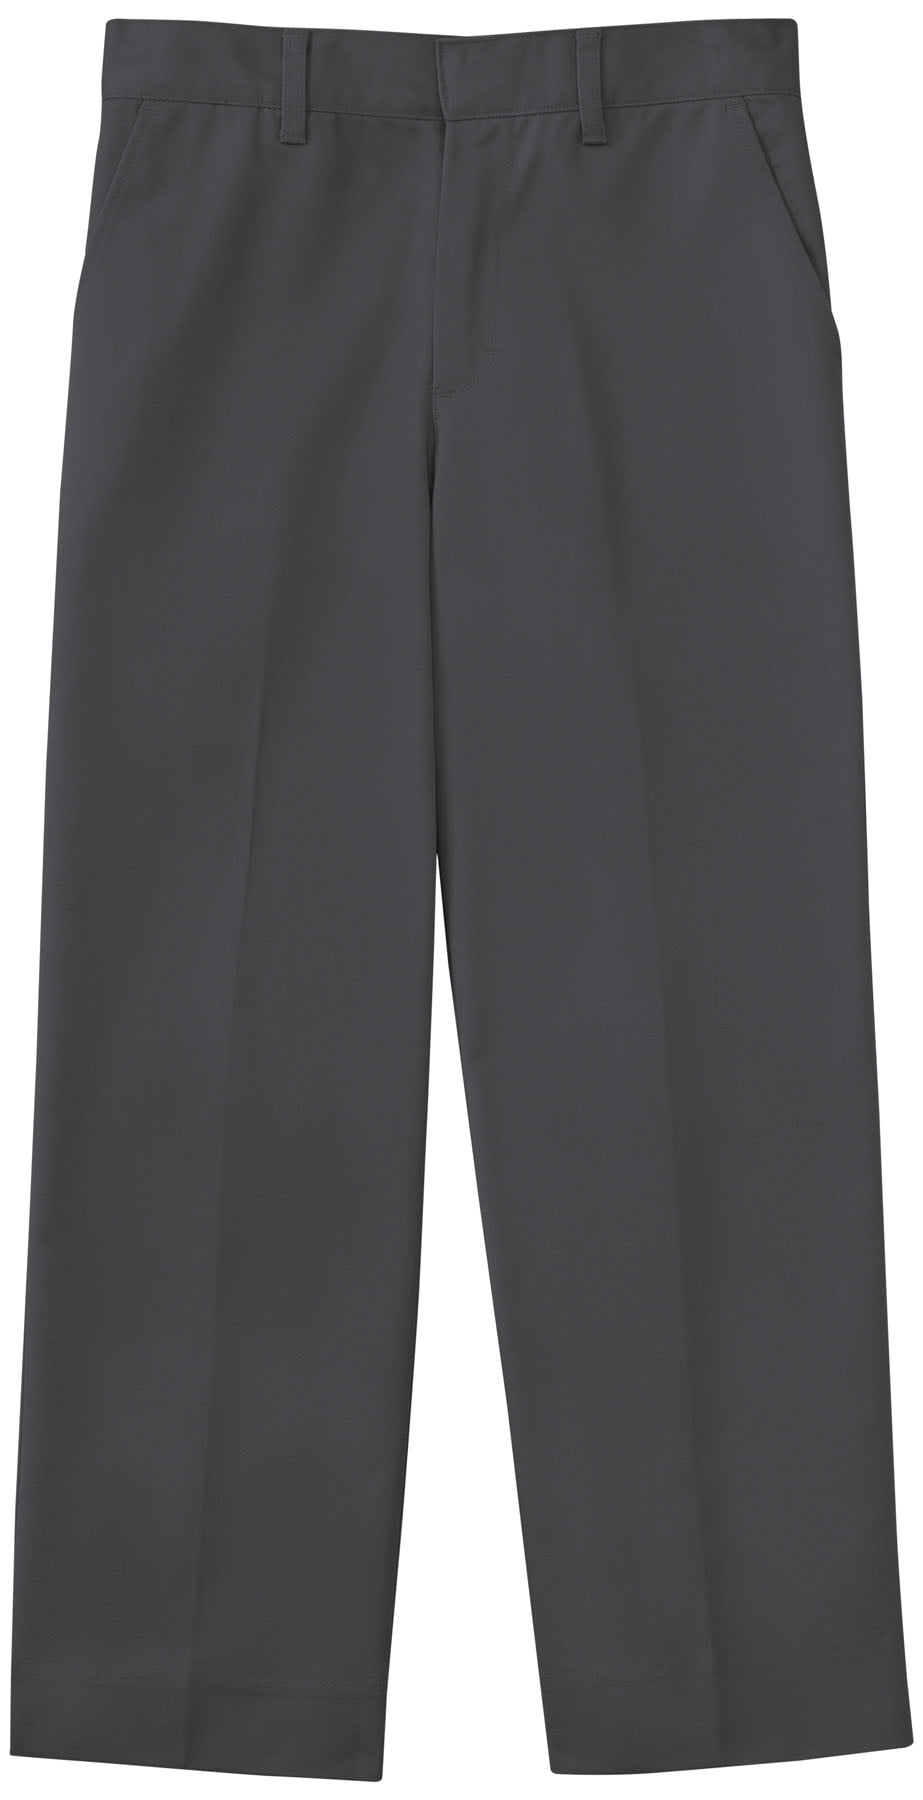 CLASSROOM Boys Uniform Flat Front Pant with Adjustable Waist 